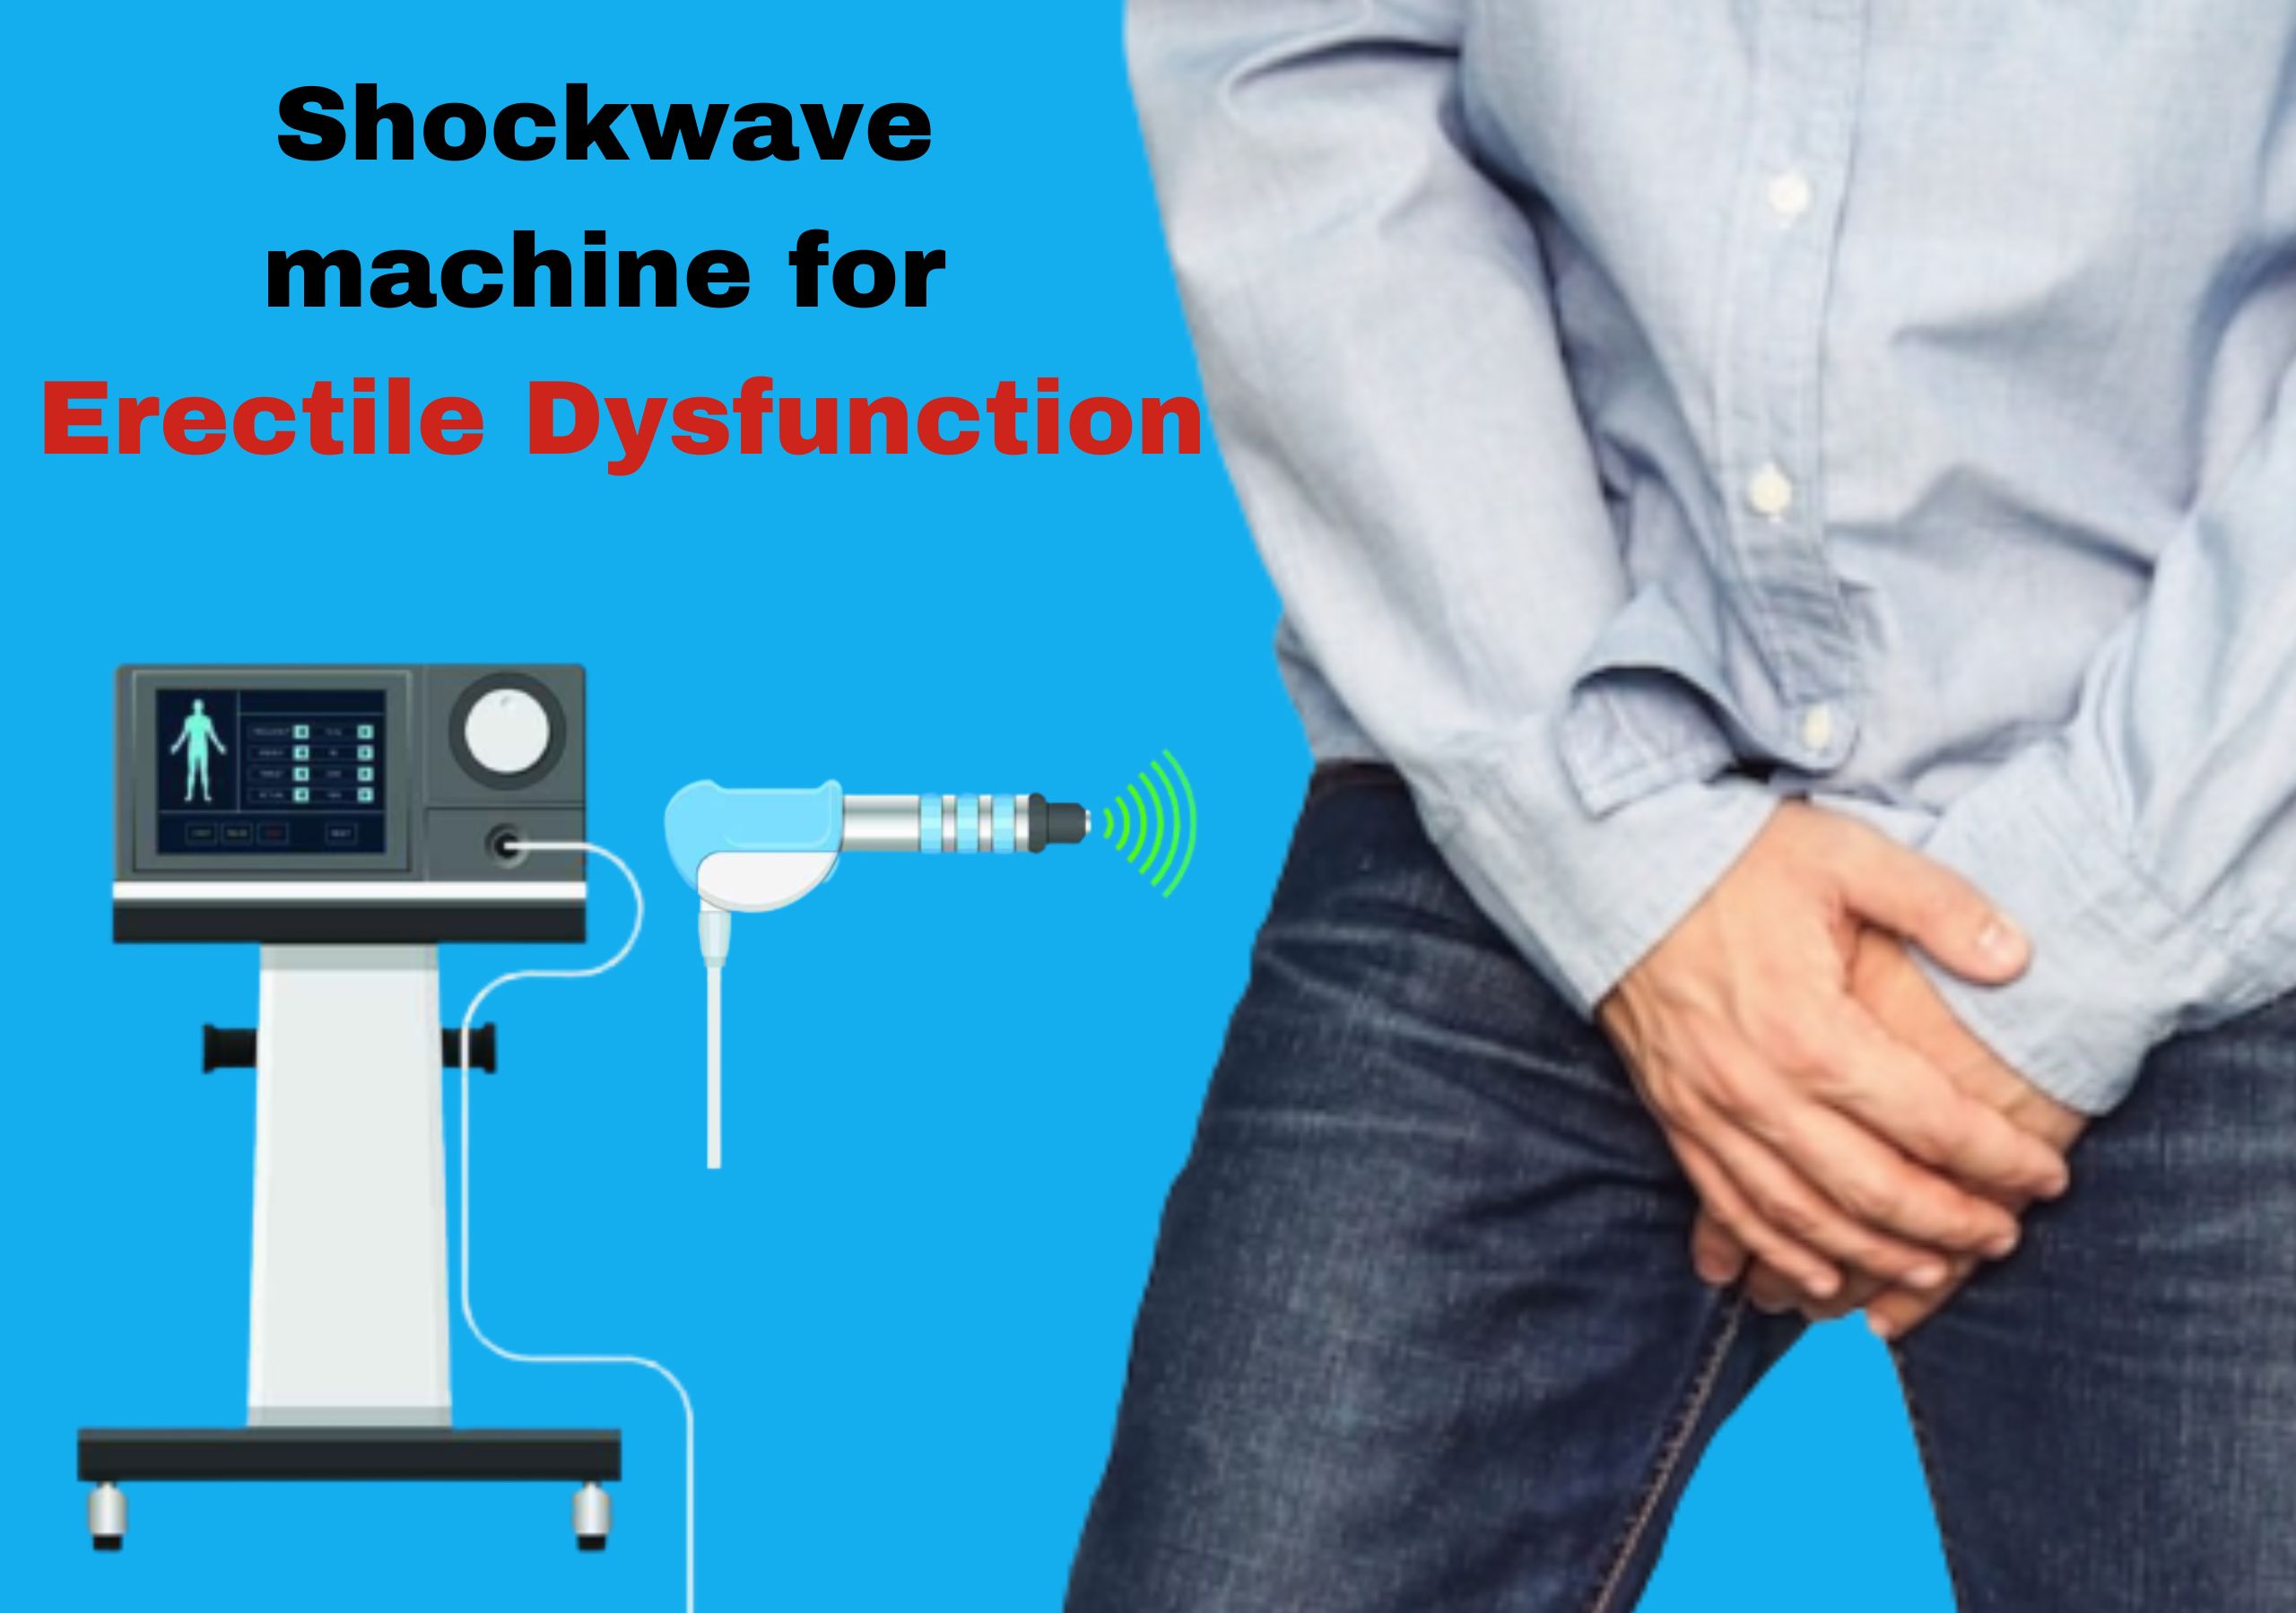 Shockwave machine for Erectile Dysfunction: How it works